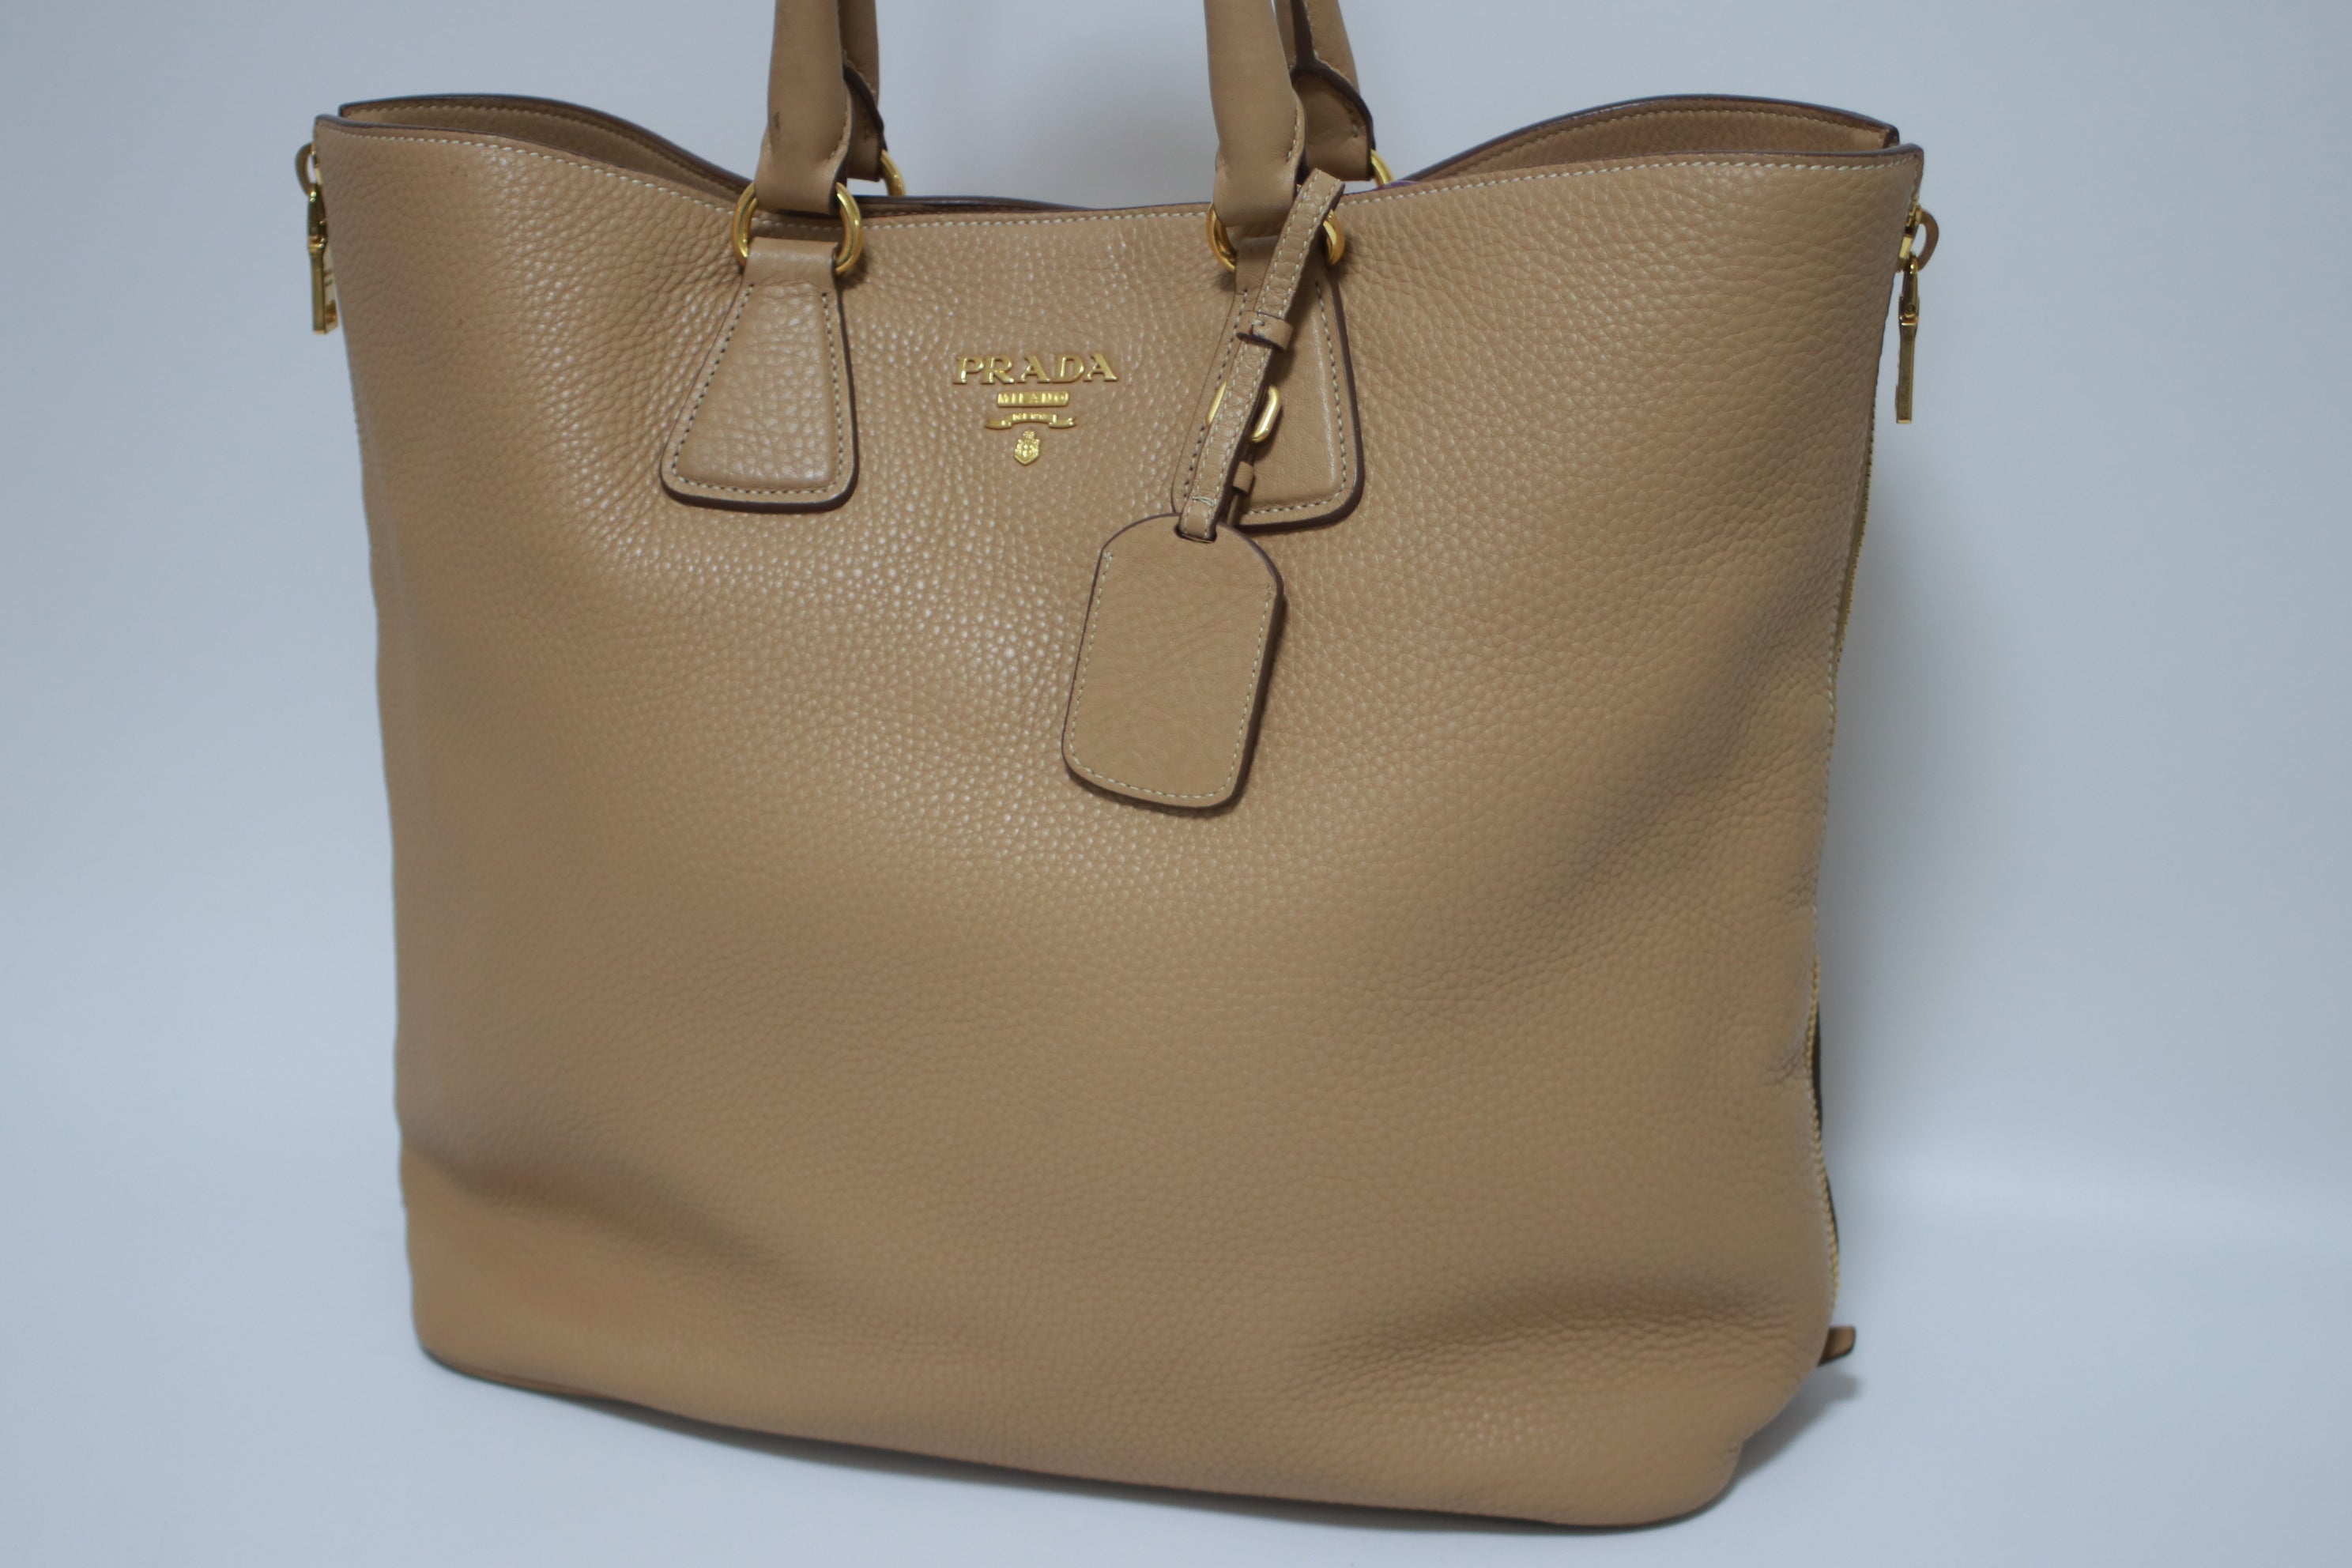 Prada Daino Leather Tote Bag Beige (no strap) Used (7415)